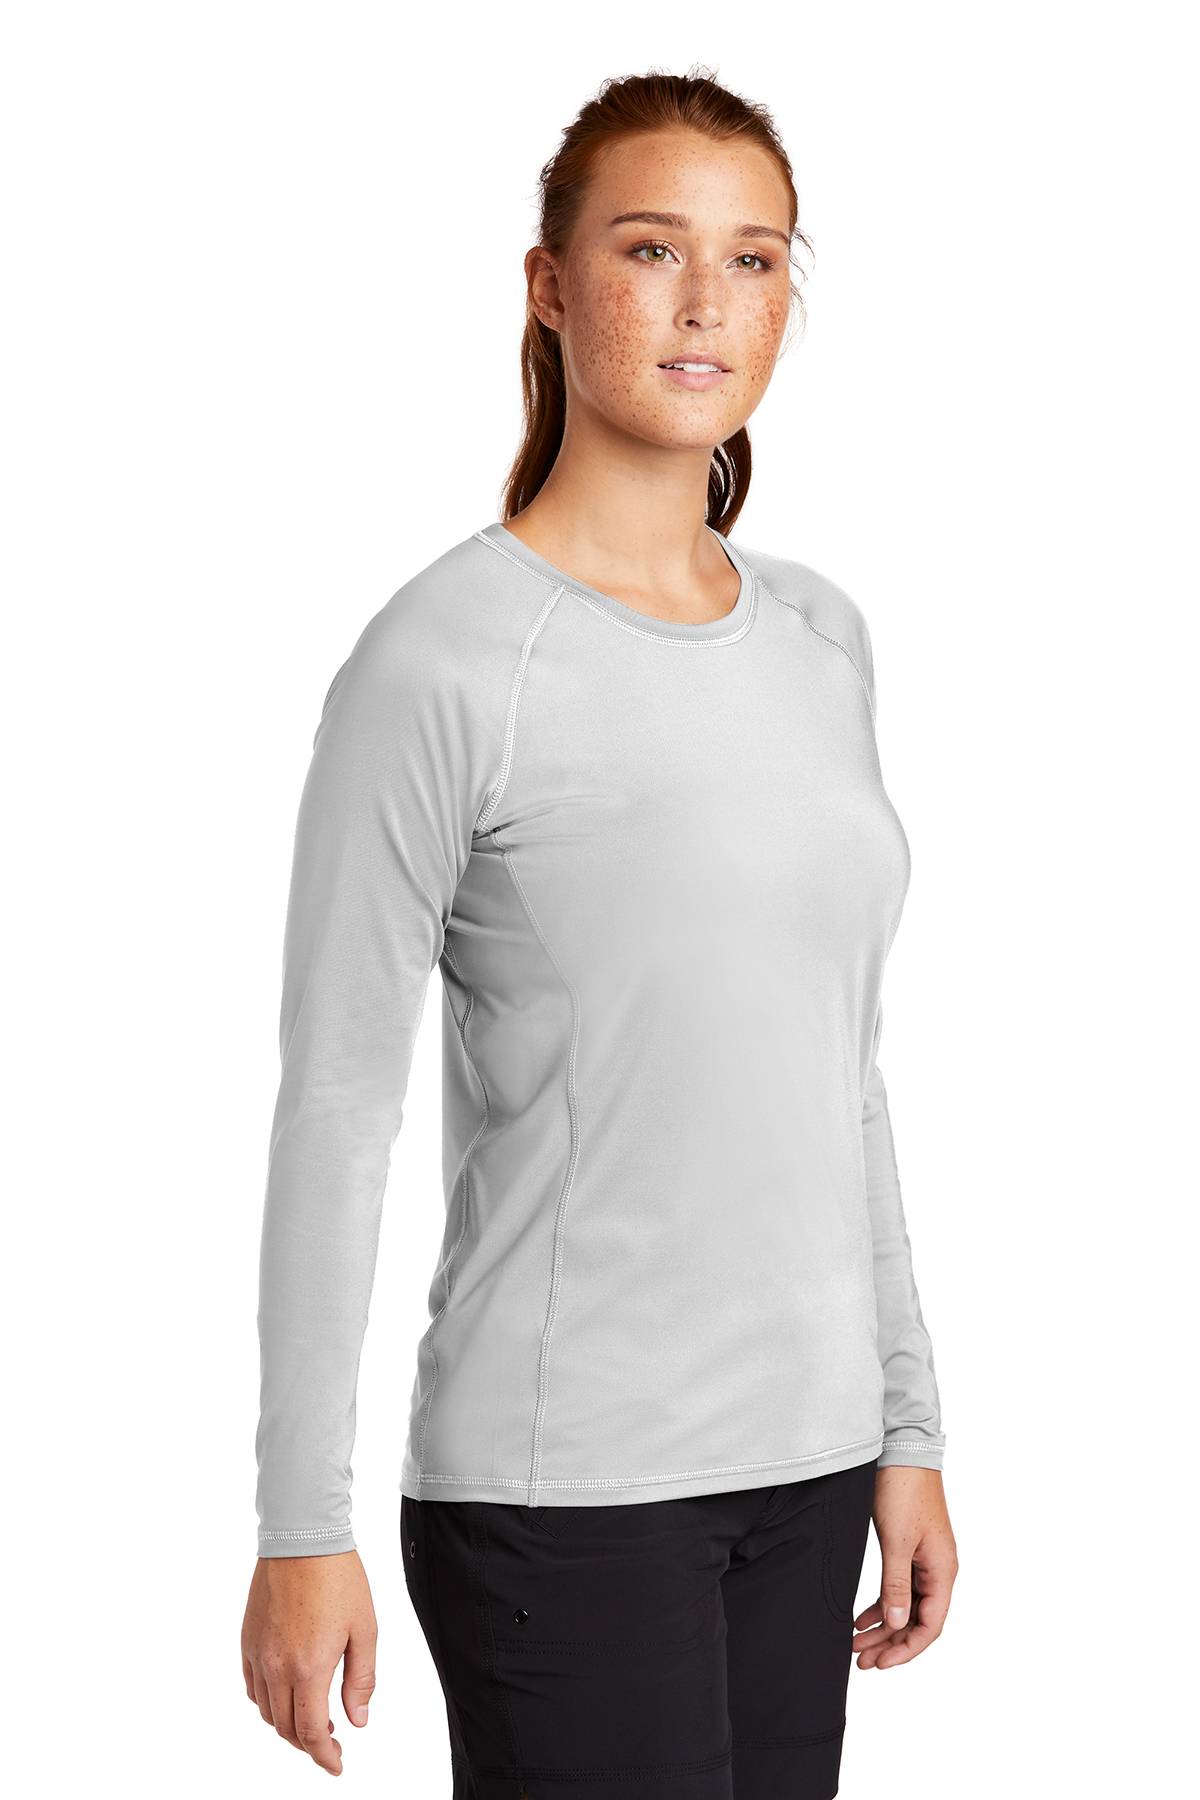 Sport-Tek Ladies Long Sleeve Rashguard Tee | Product | Sport-Tek